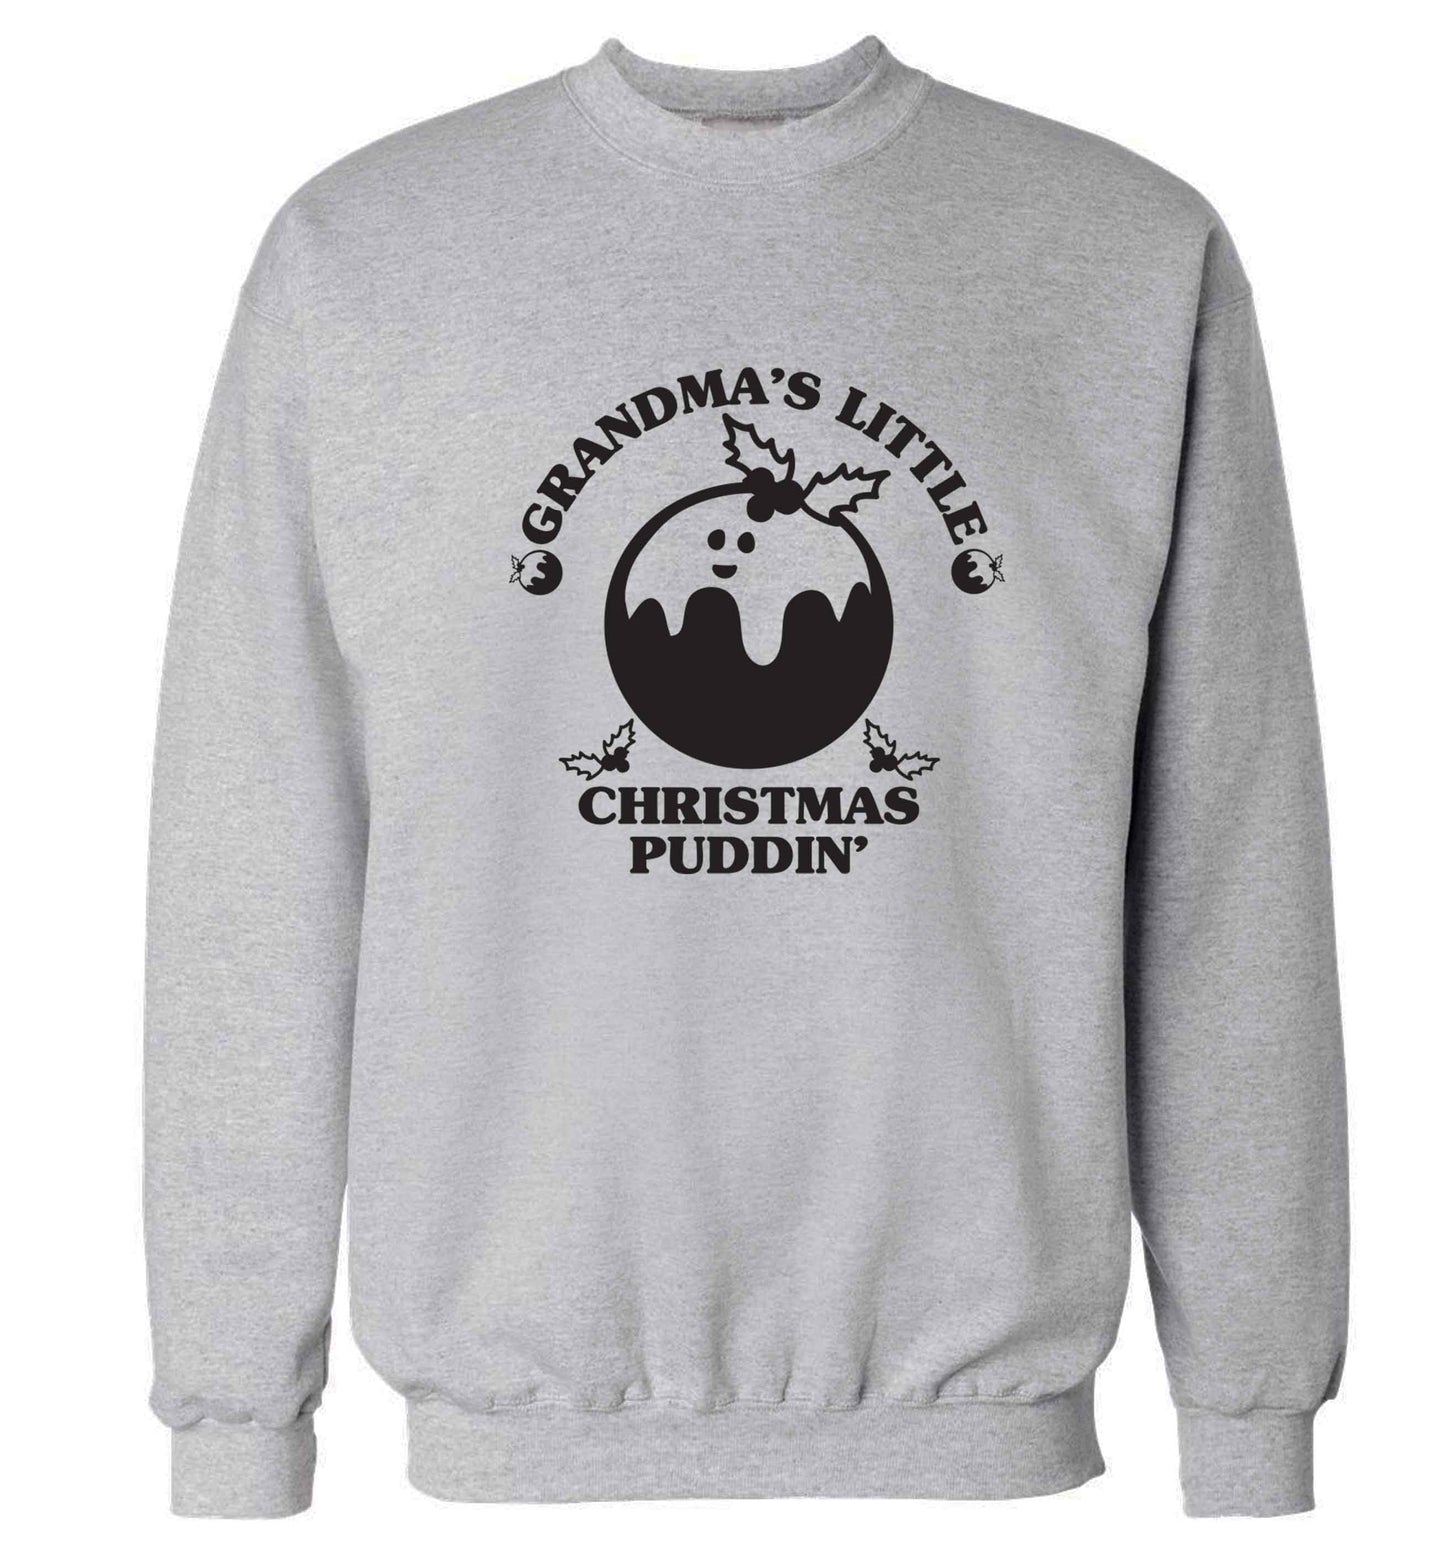 Grandma's little Christmas puddin' Adult's unisex grey Sweater 2XL